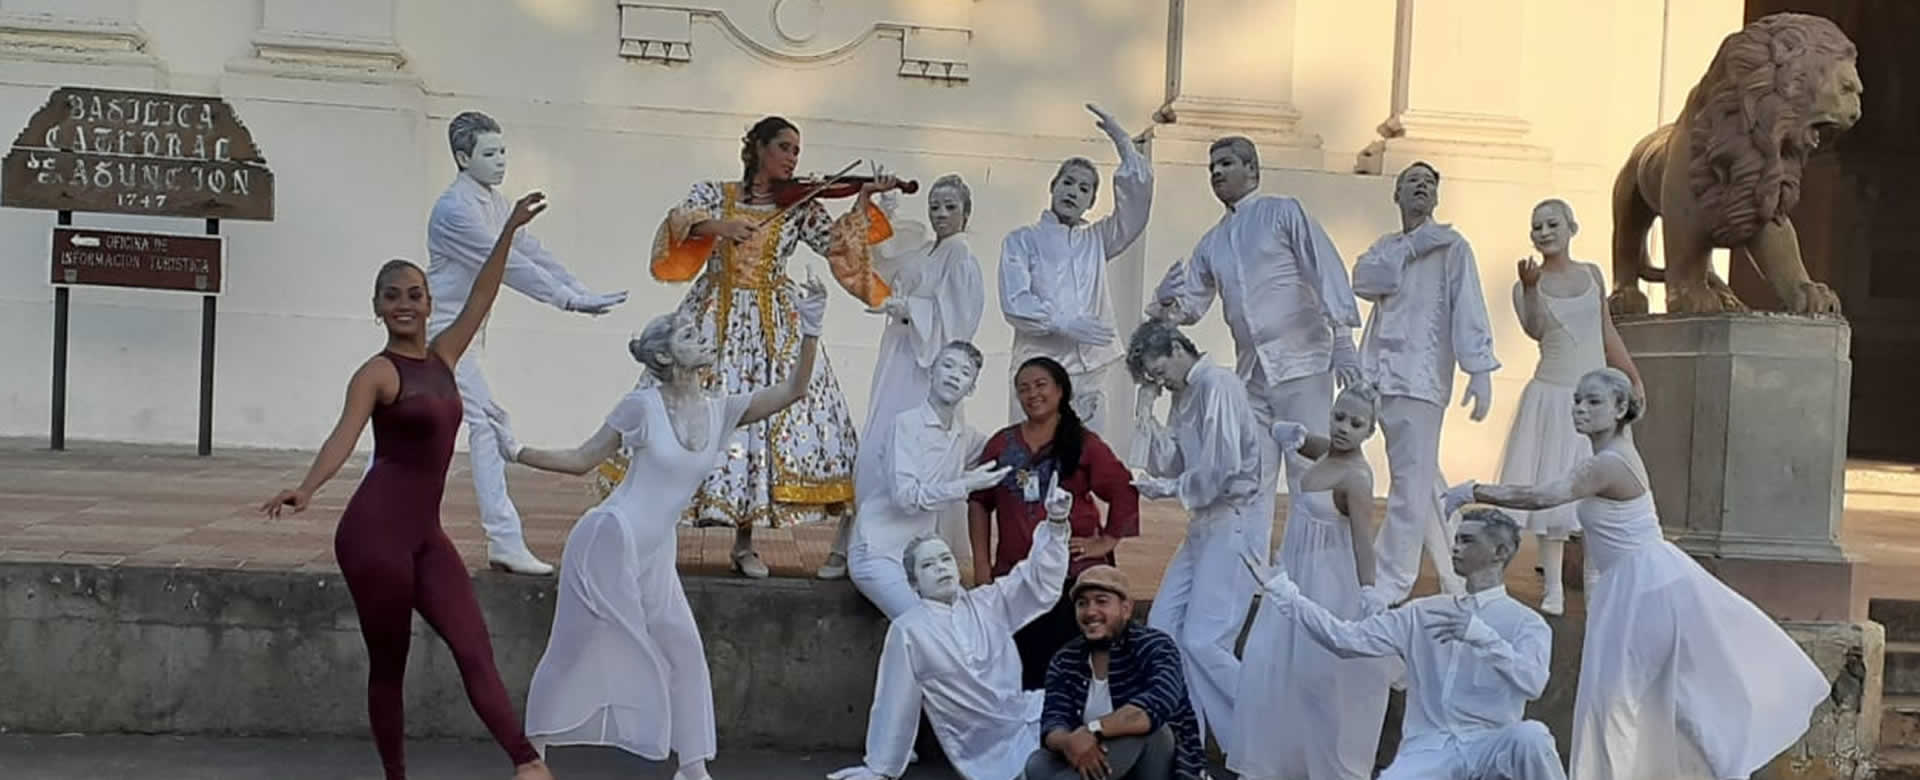 Festival Internacional de las Artes Rubén Darío llega a las calles de León